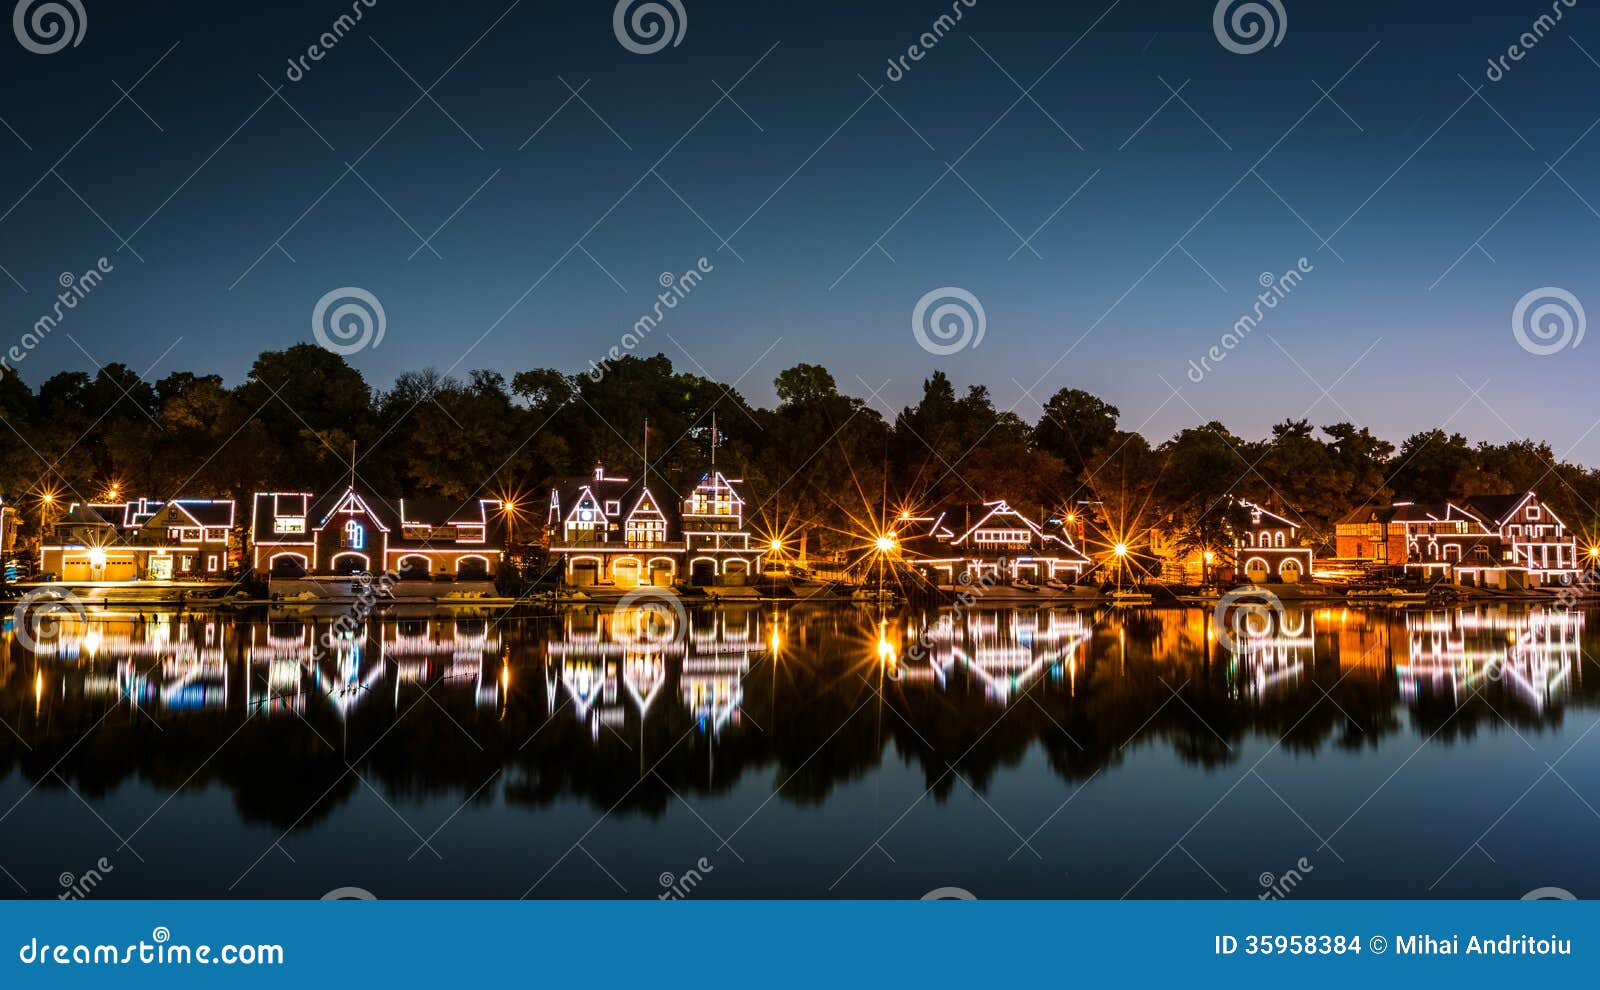 philadelphia boathouse row by night